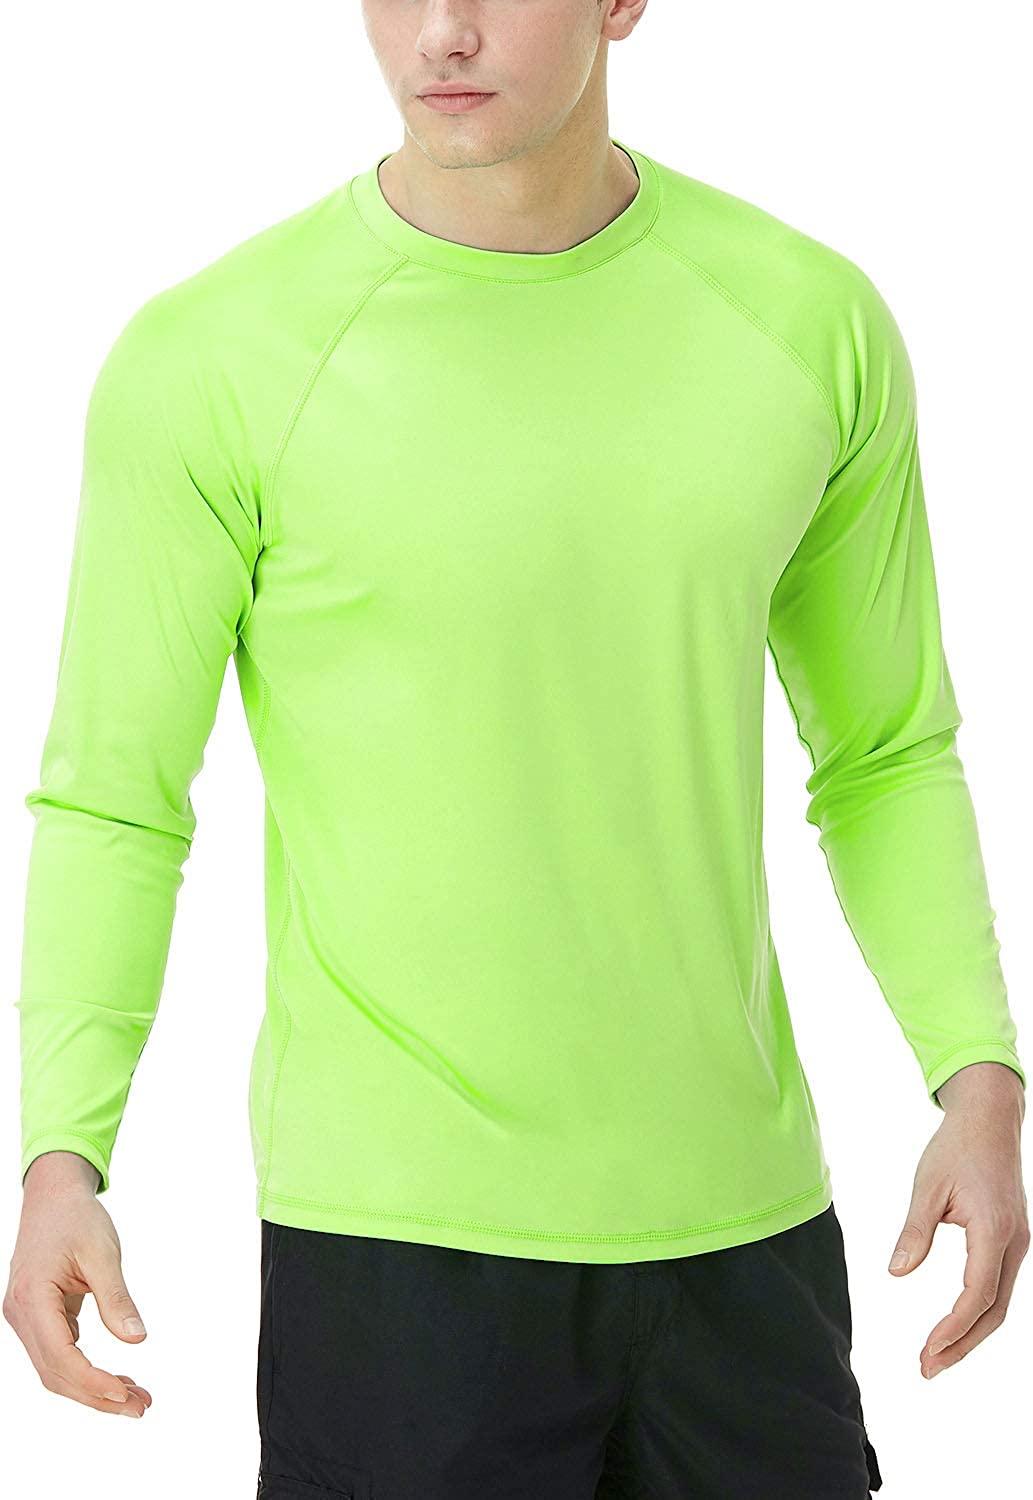 Loose-Fit Long Sleeve Shirts TSLA Men's Rashguard Swim Shirts Cool ... UPF 50 